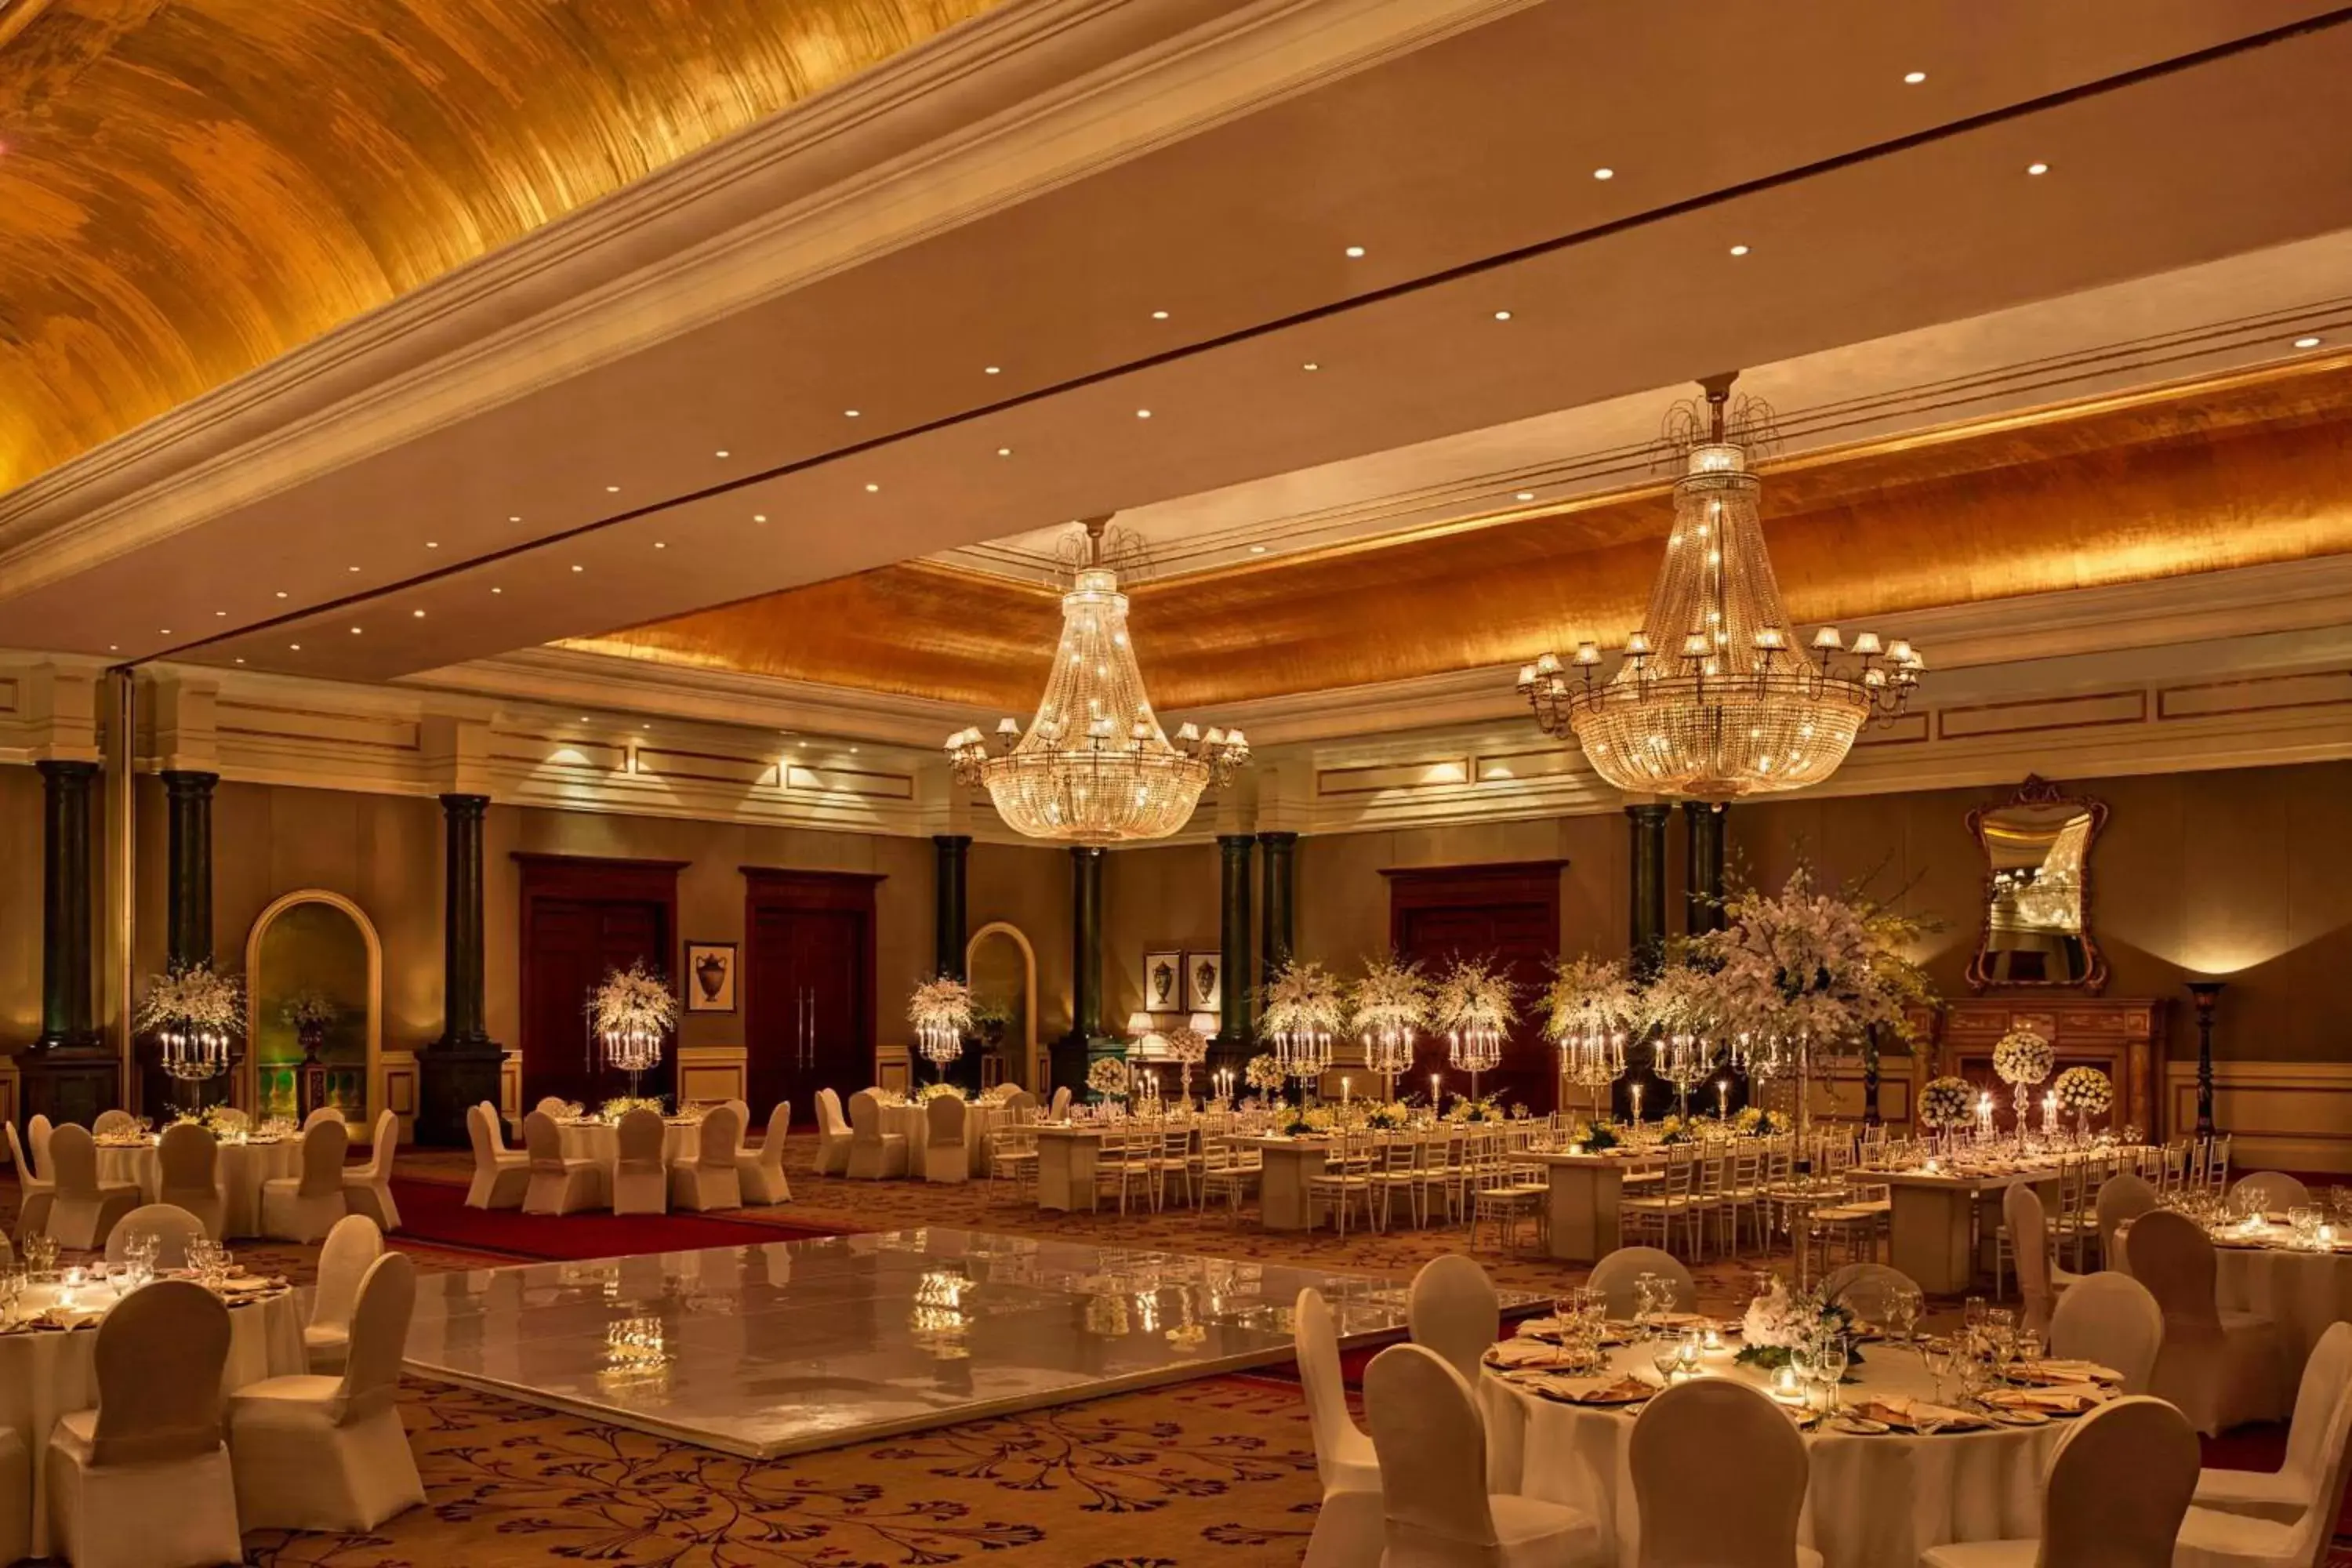 Banquet/Function facilities, Banquet Facilities in JW Marriott Hotel Cairo